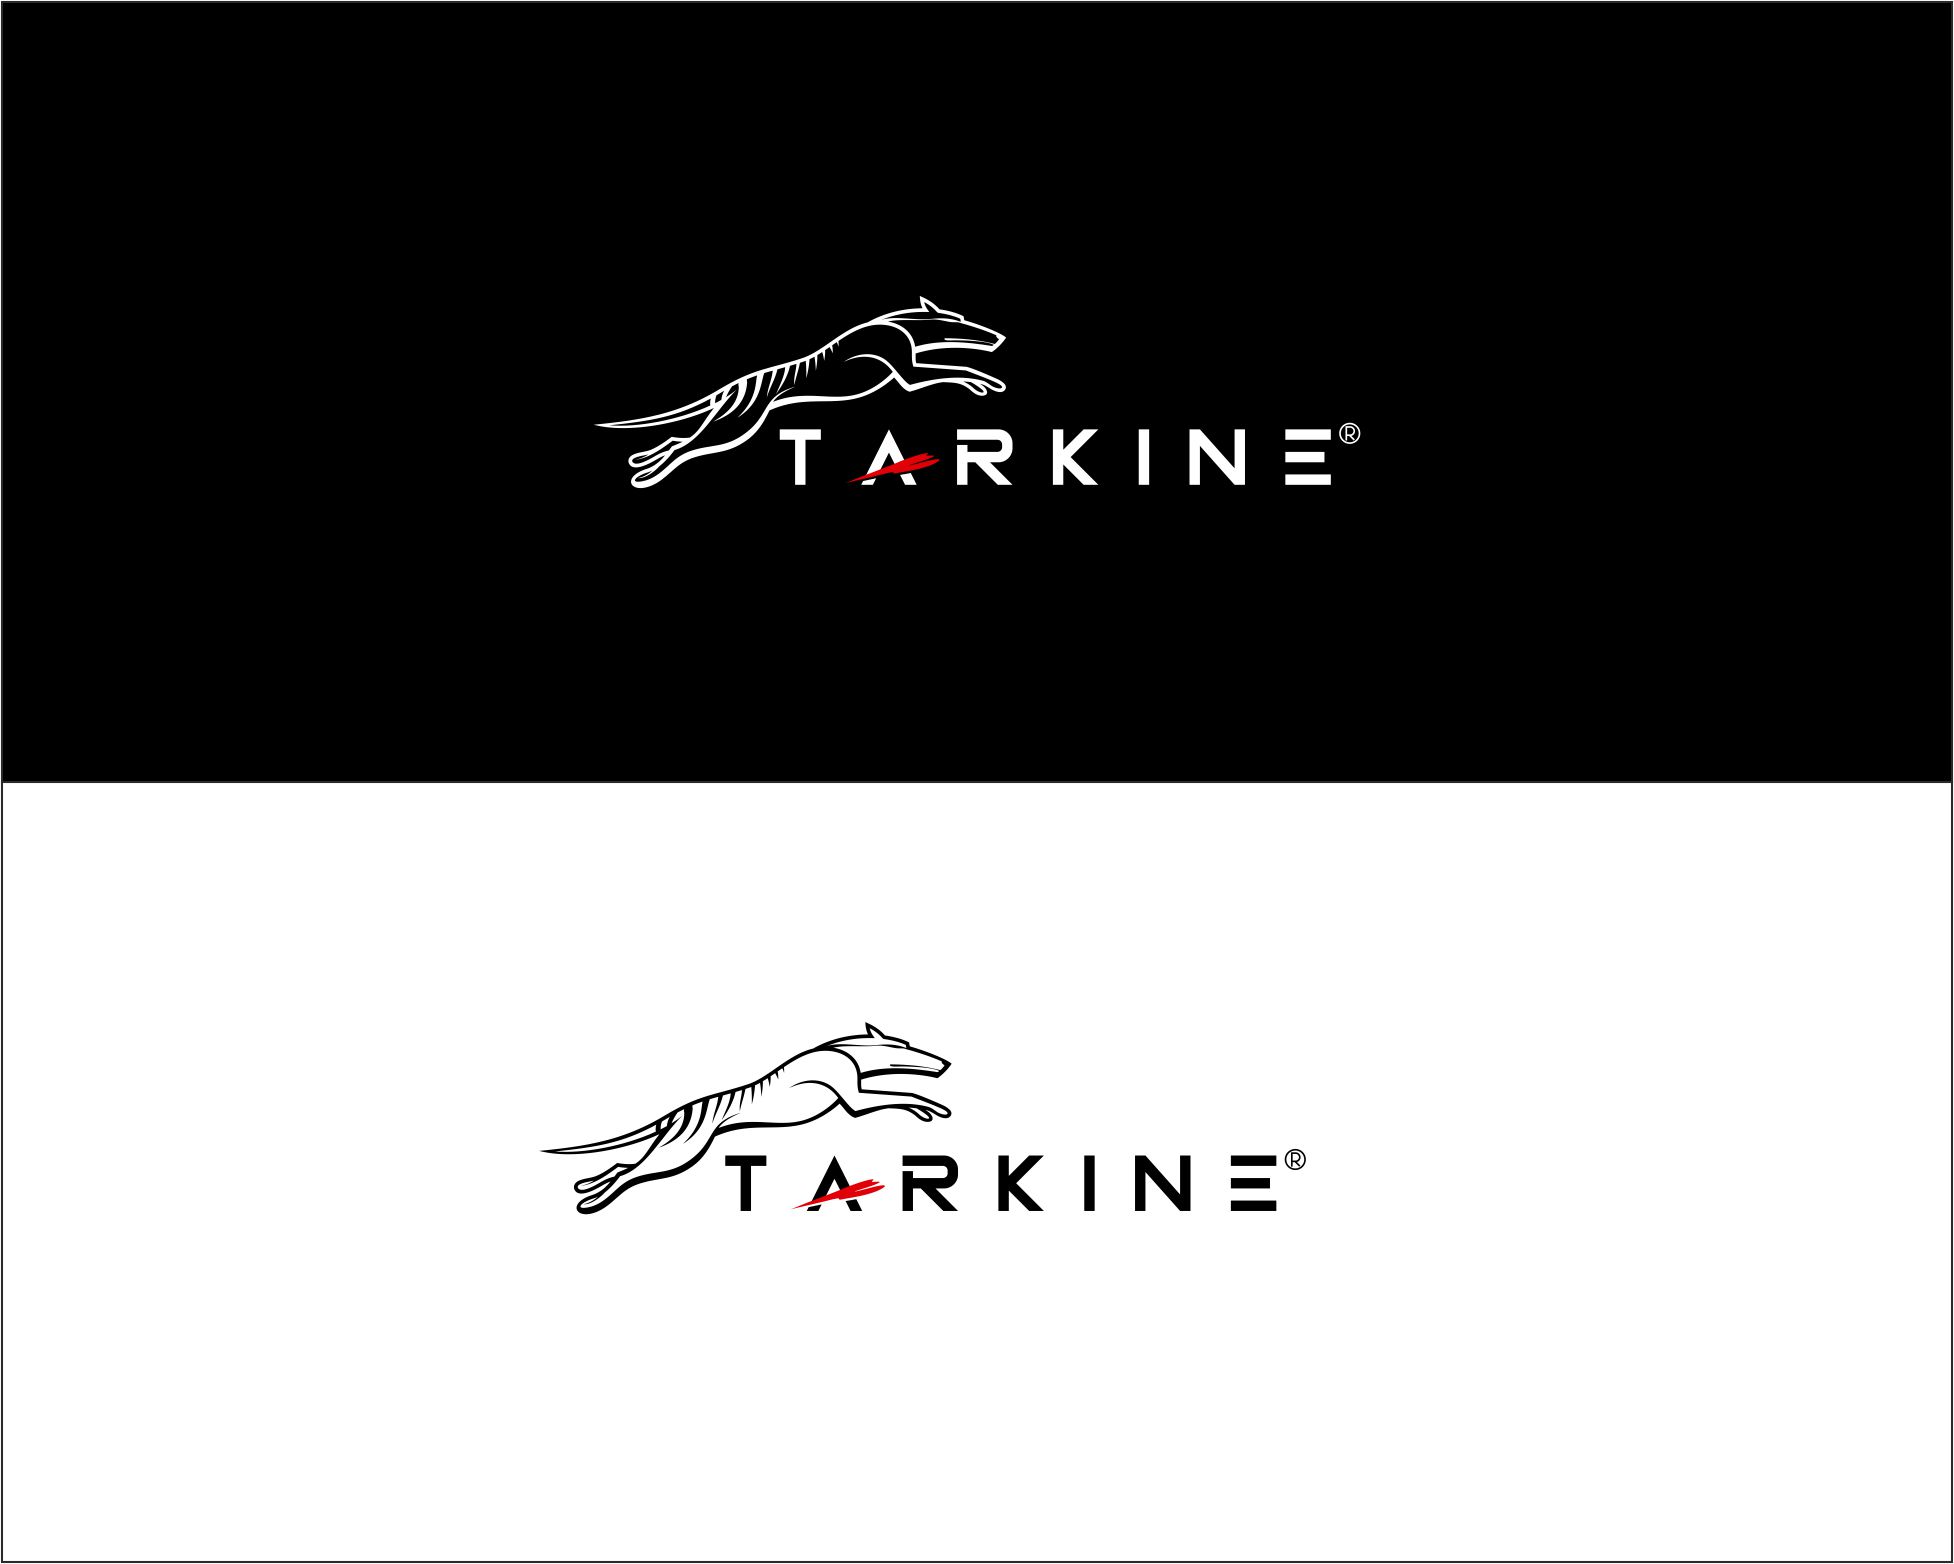 Logo Design entry 1578380 submitted by jangAbayz to the Logo Design for TARKINE run by tarkine